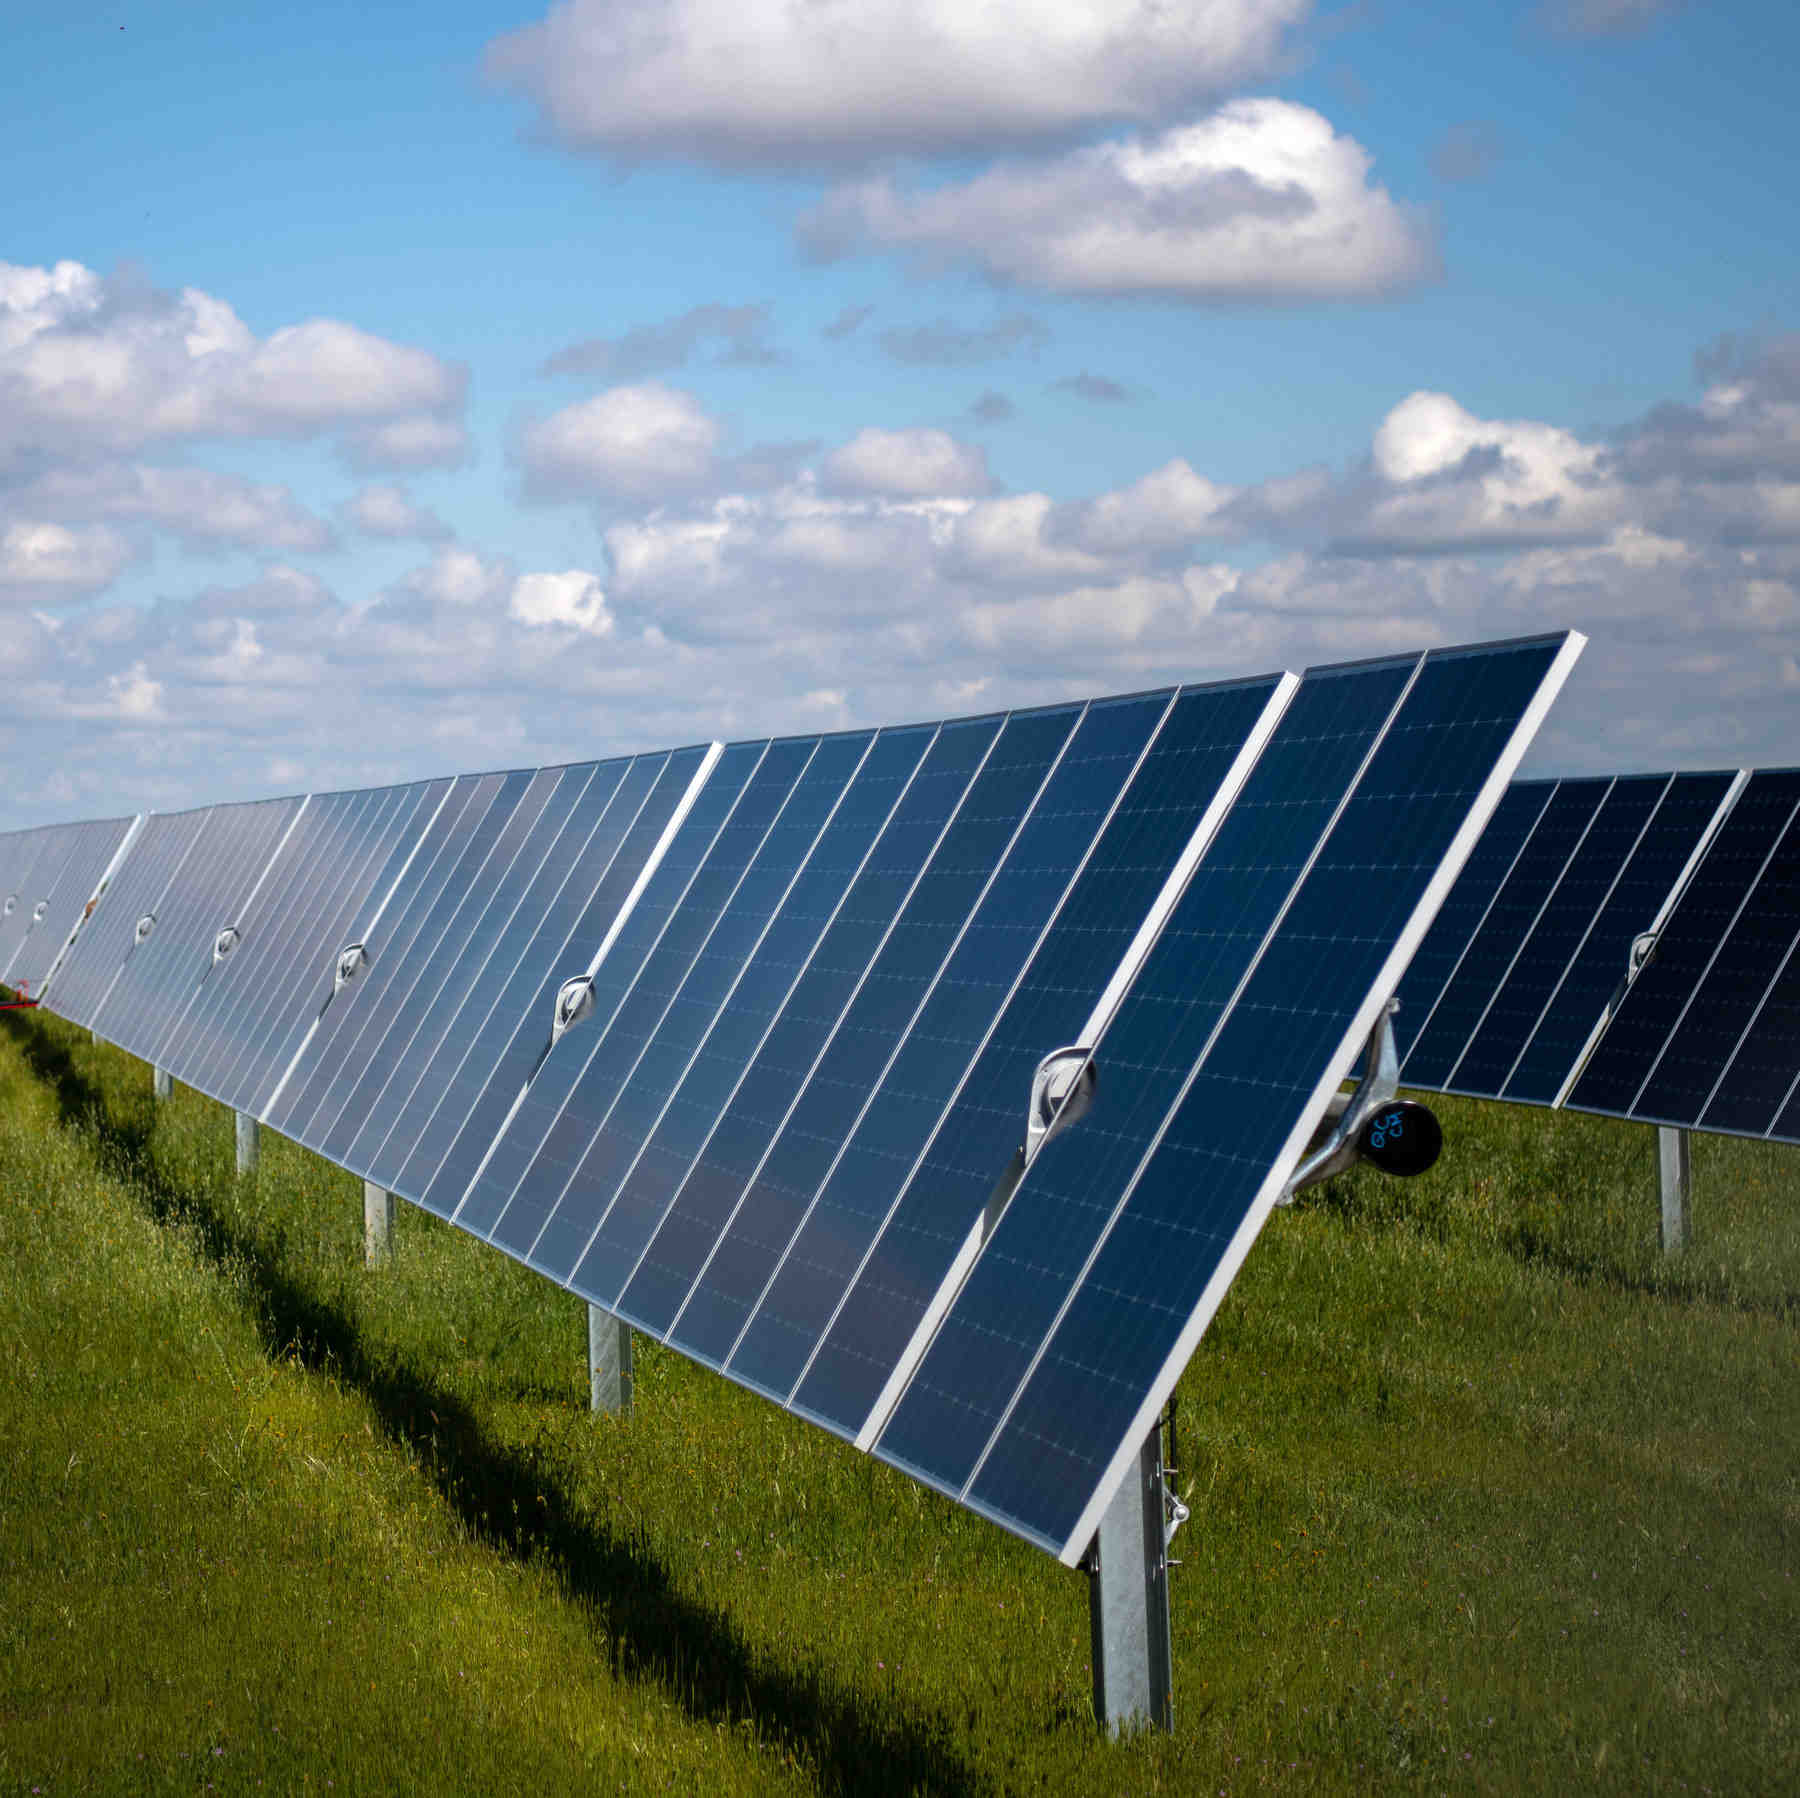 Do solar farms give off radiation?